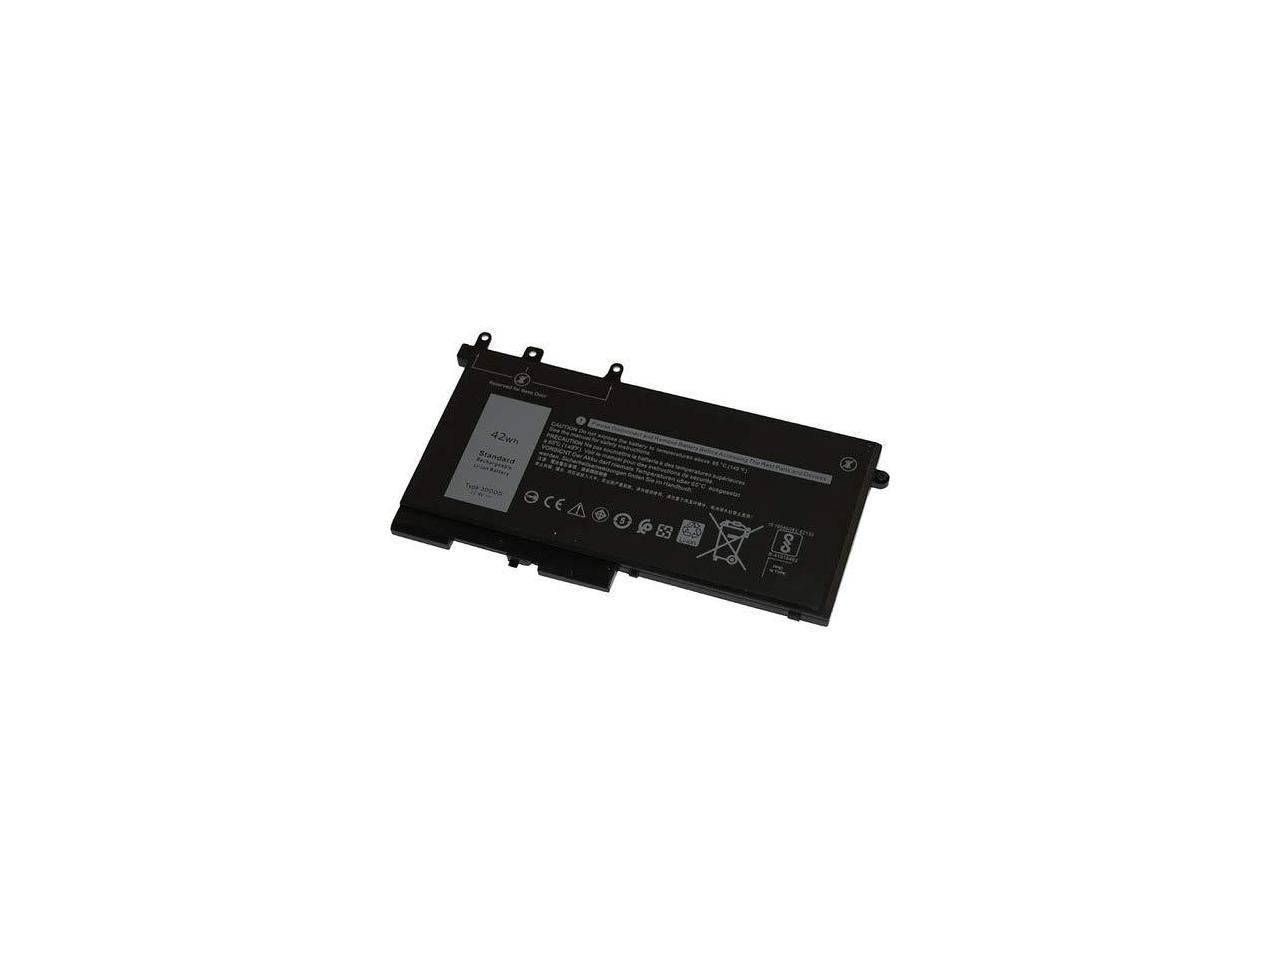 Primary image for V7 3DDDG-V7 11.4 V DC 3684 mAh Li-Polymer Replacement Battery for Selected Dell 